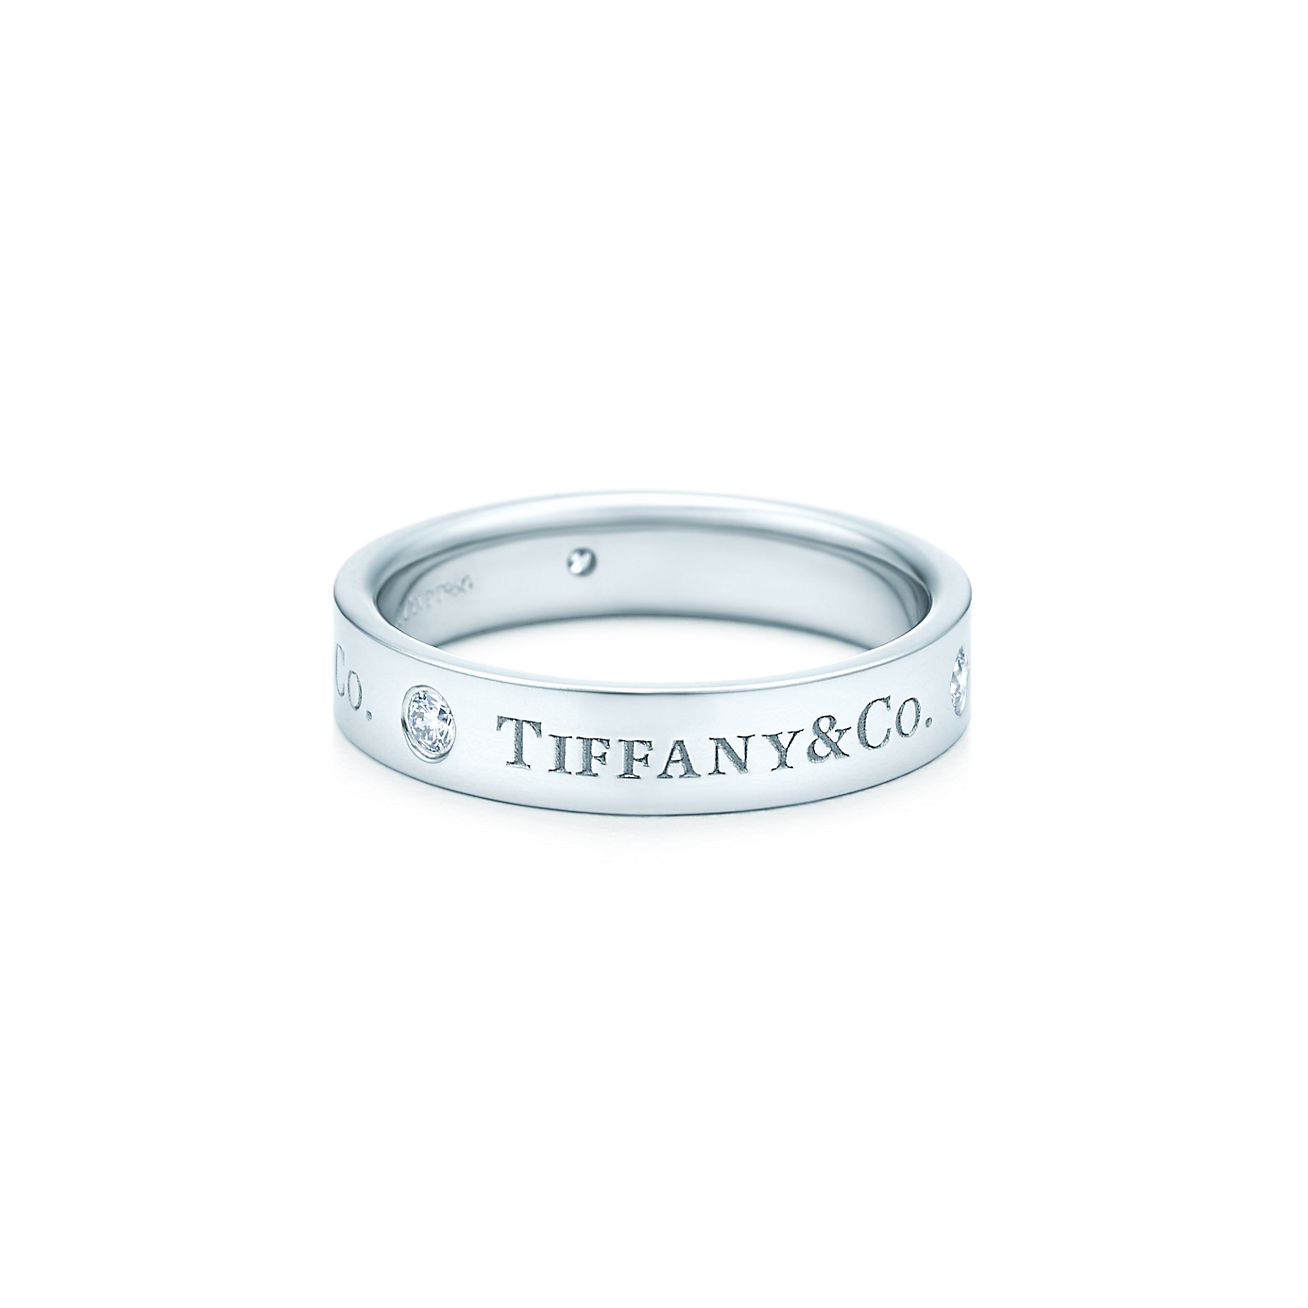 tiffany & co silver ring